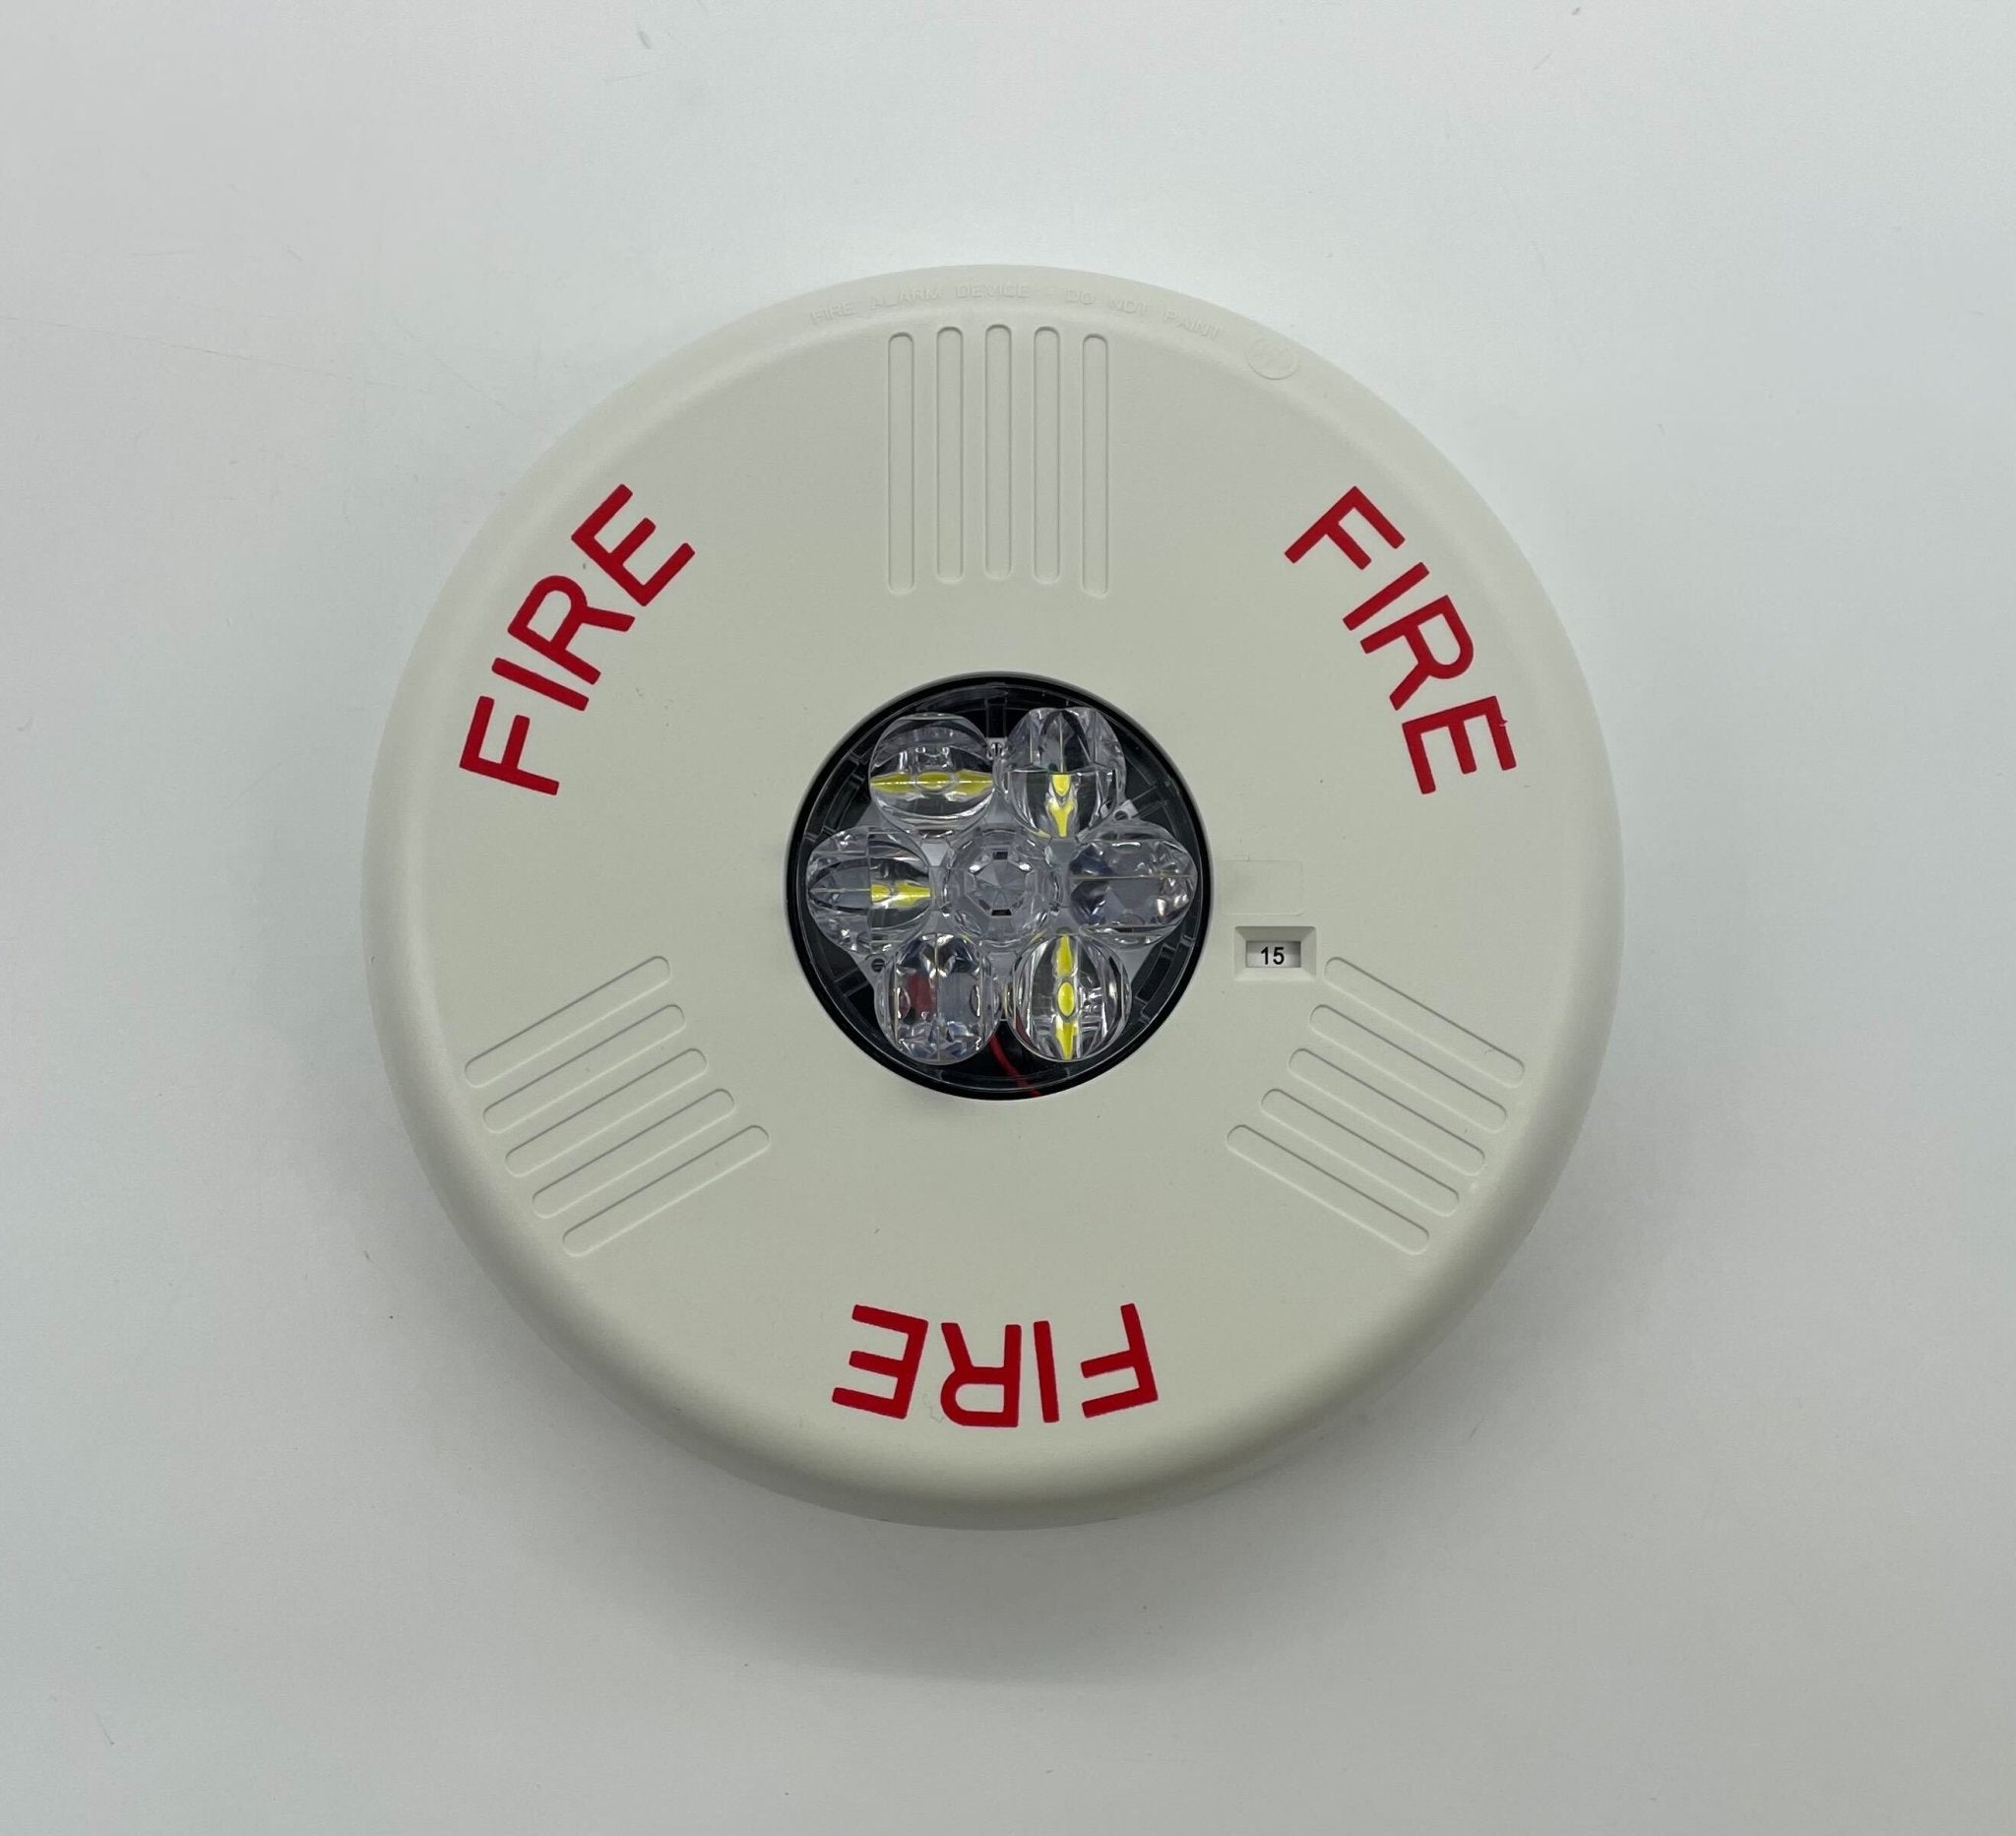 Wheelock ELSTWC - The Fire Alarm Supplier